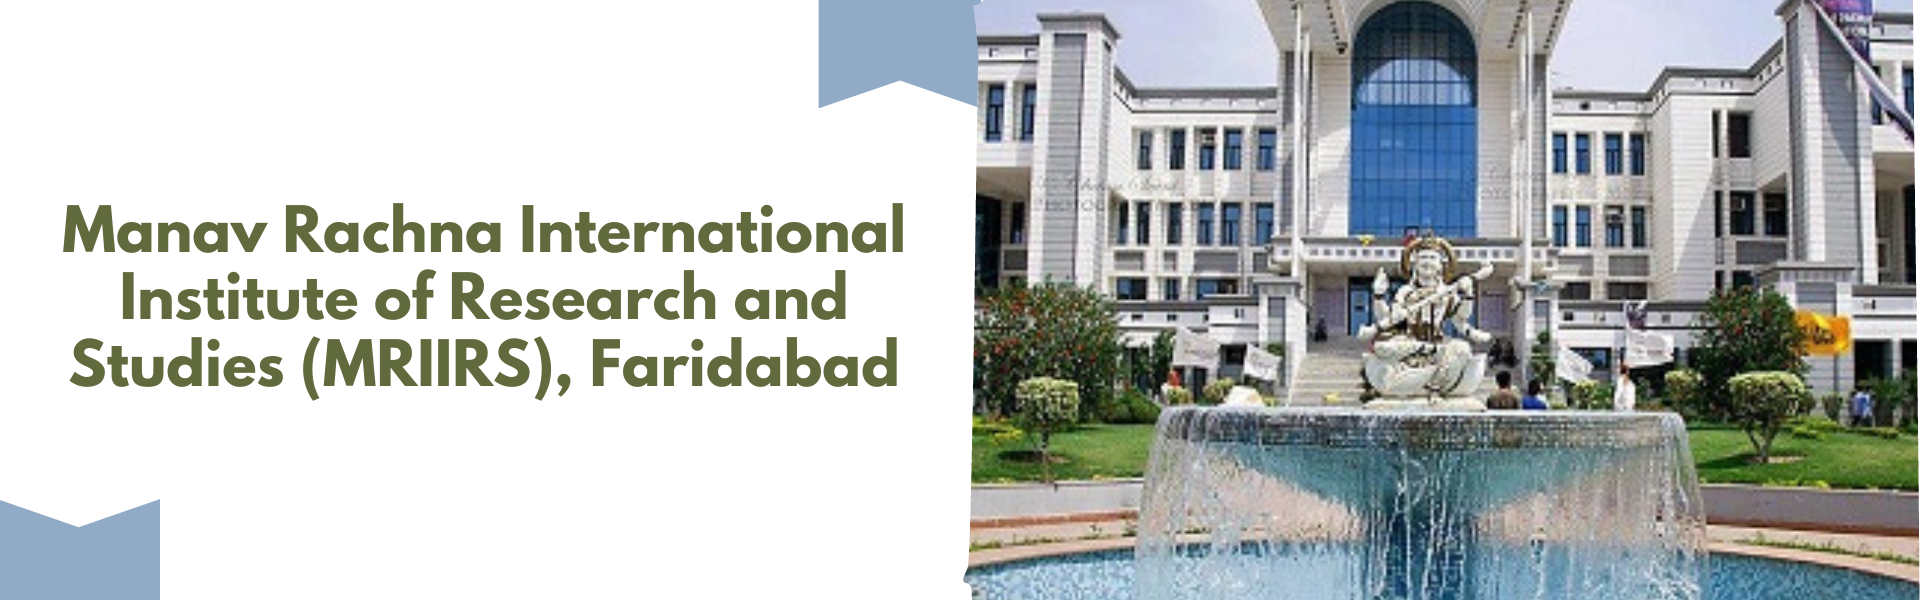 Manav Rachna International Institute of Research and Studies (MRIIRS), Faridabad